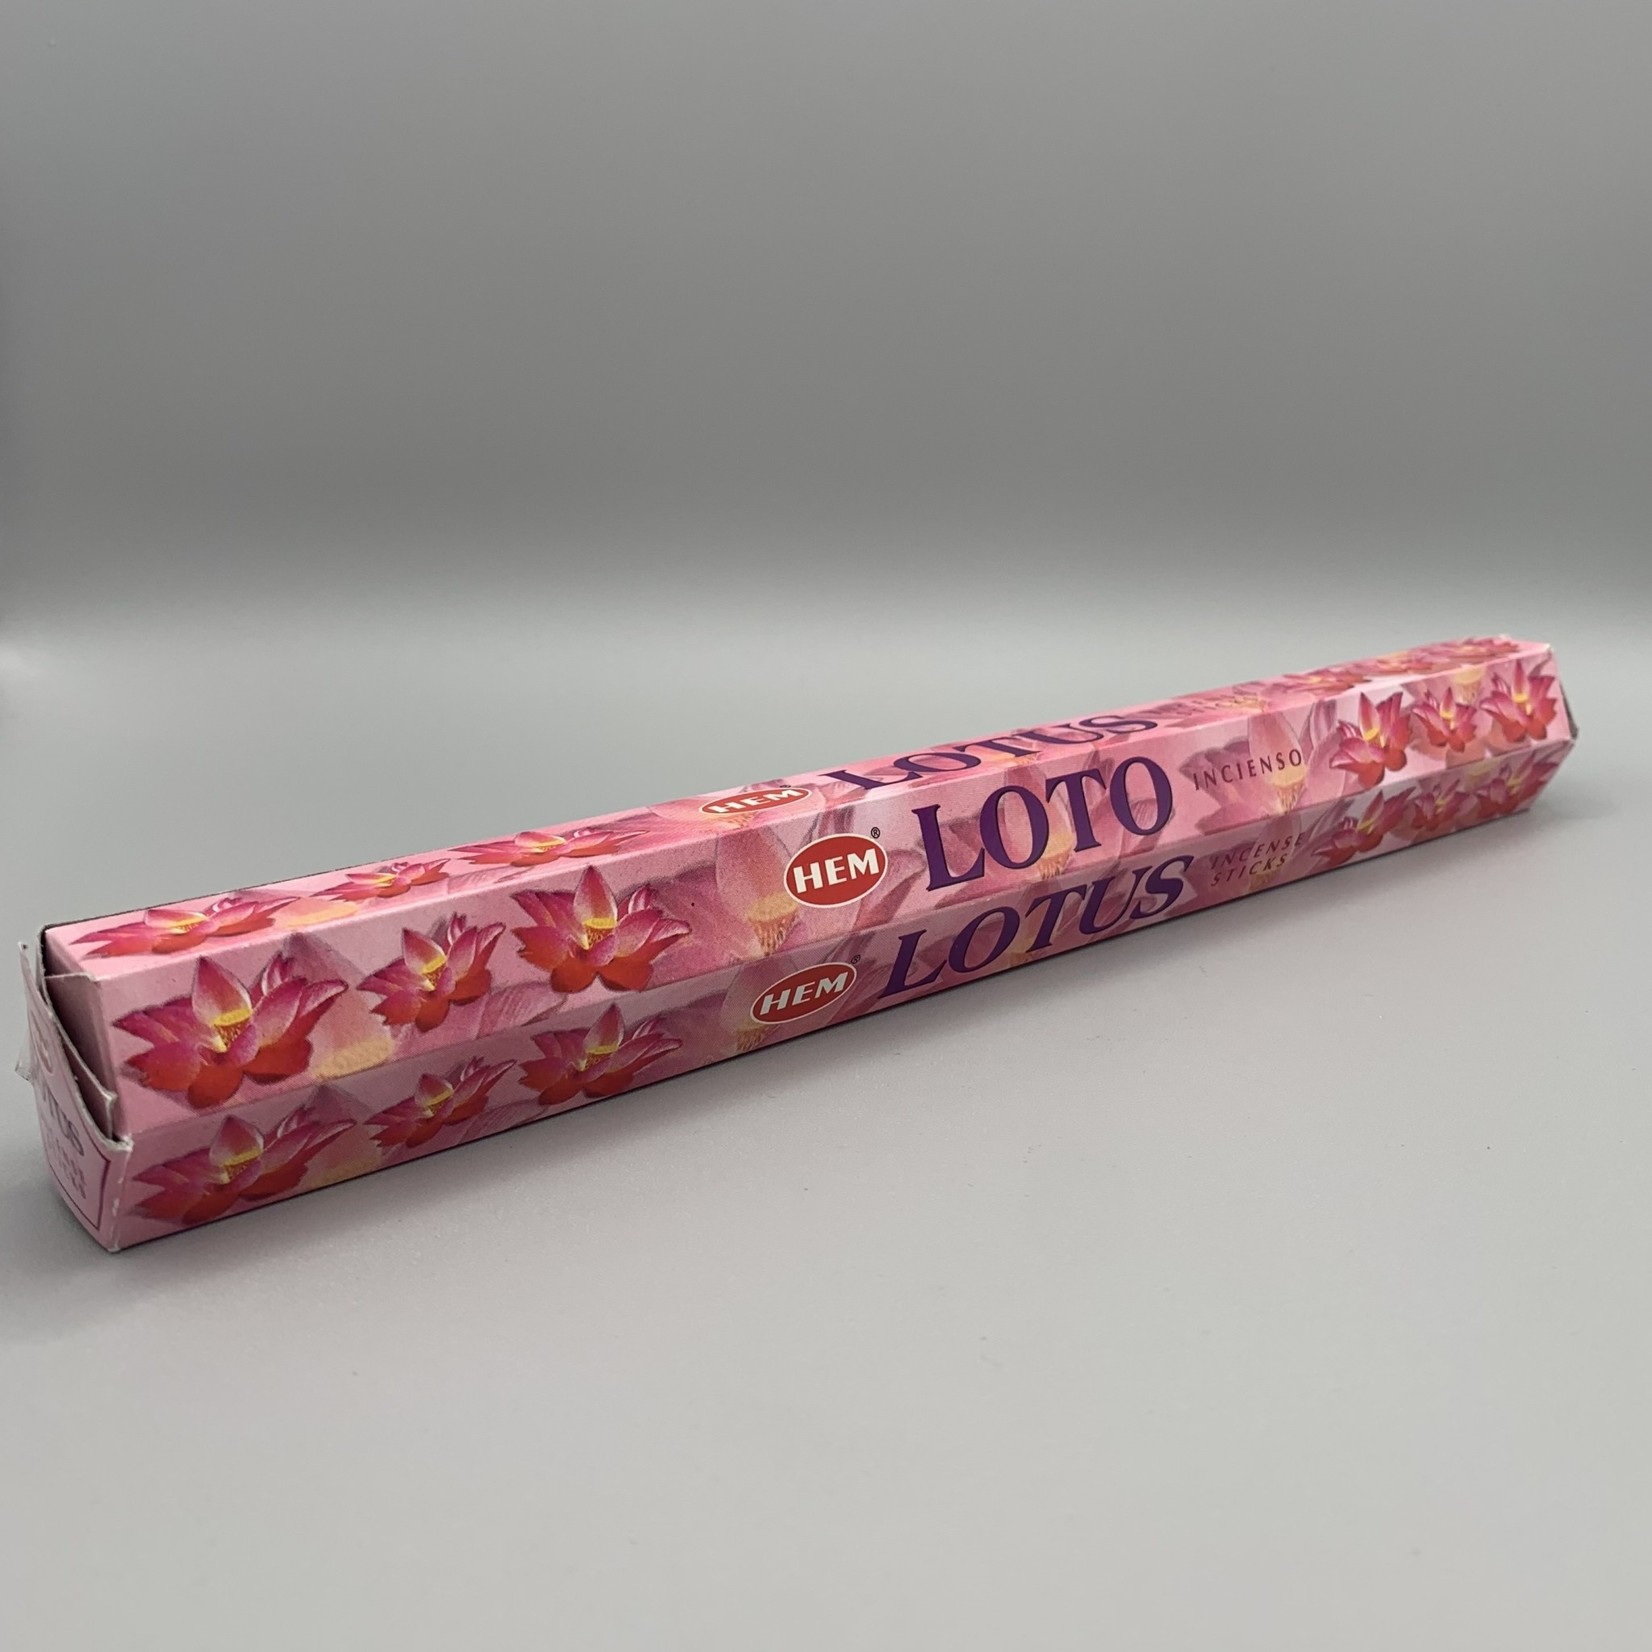 HEM Incense: Lotus, 20 Sticks